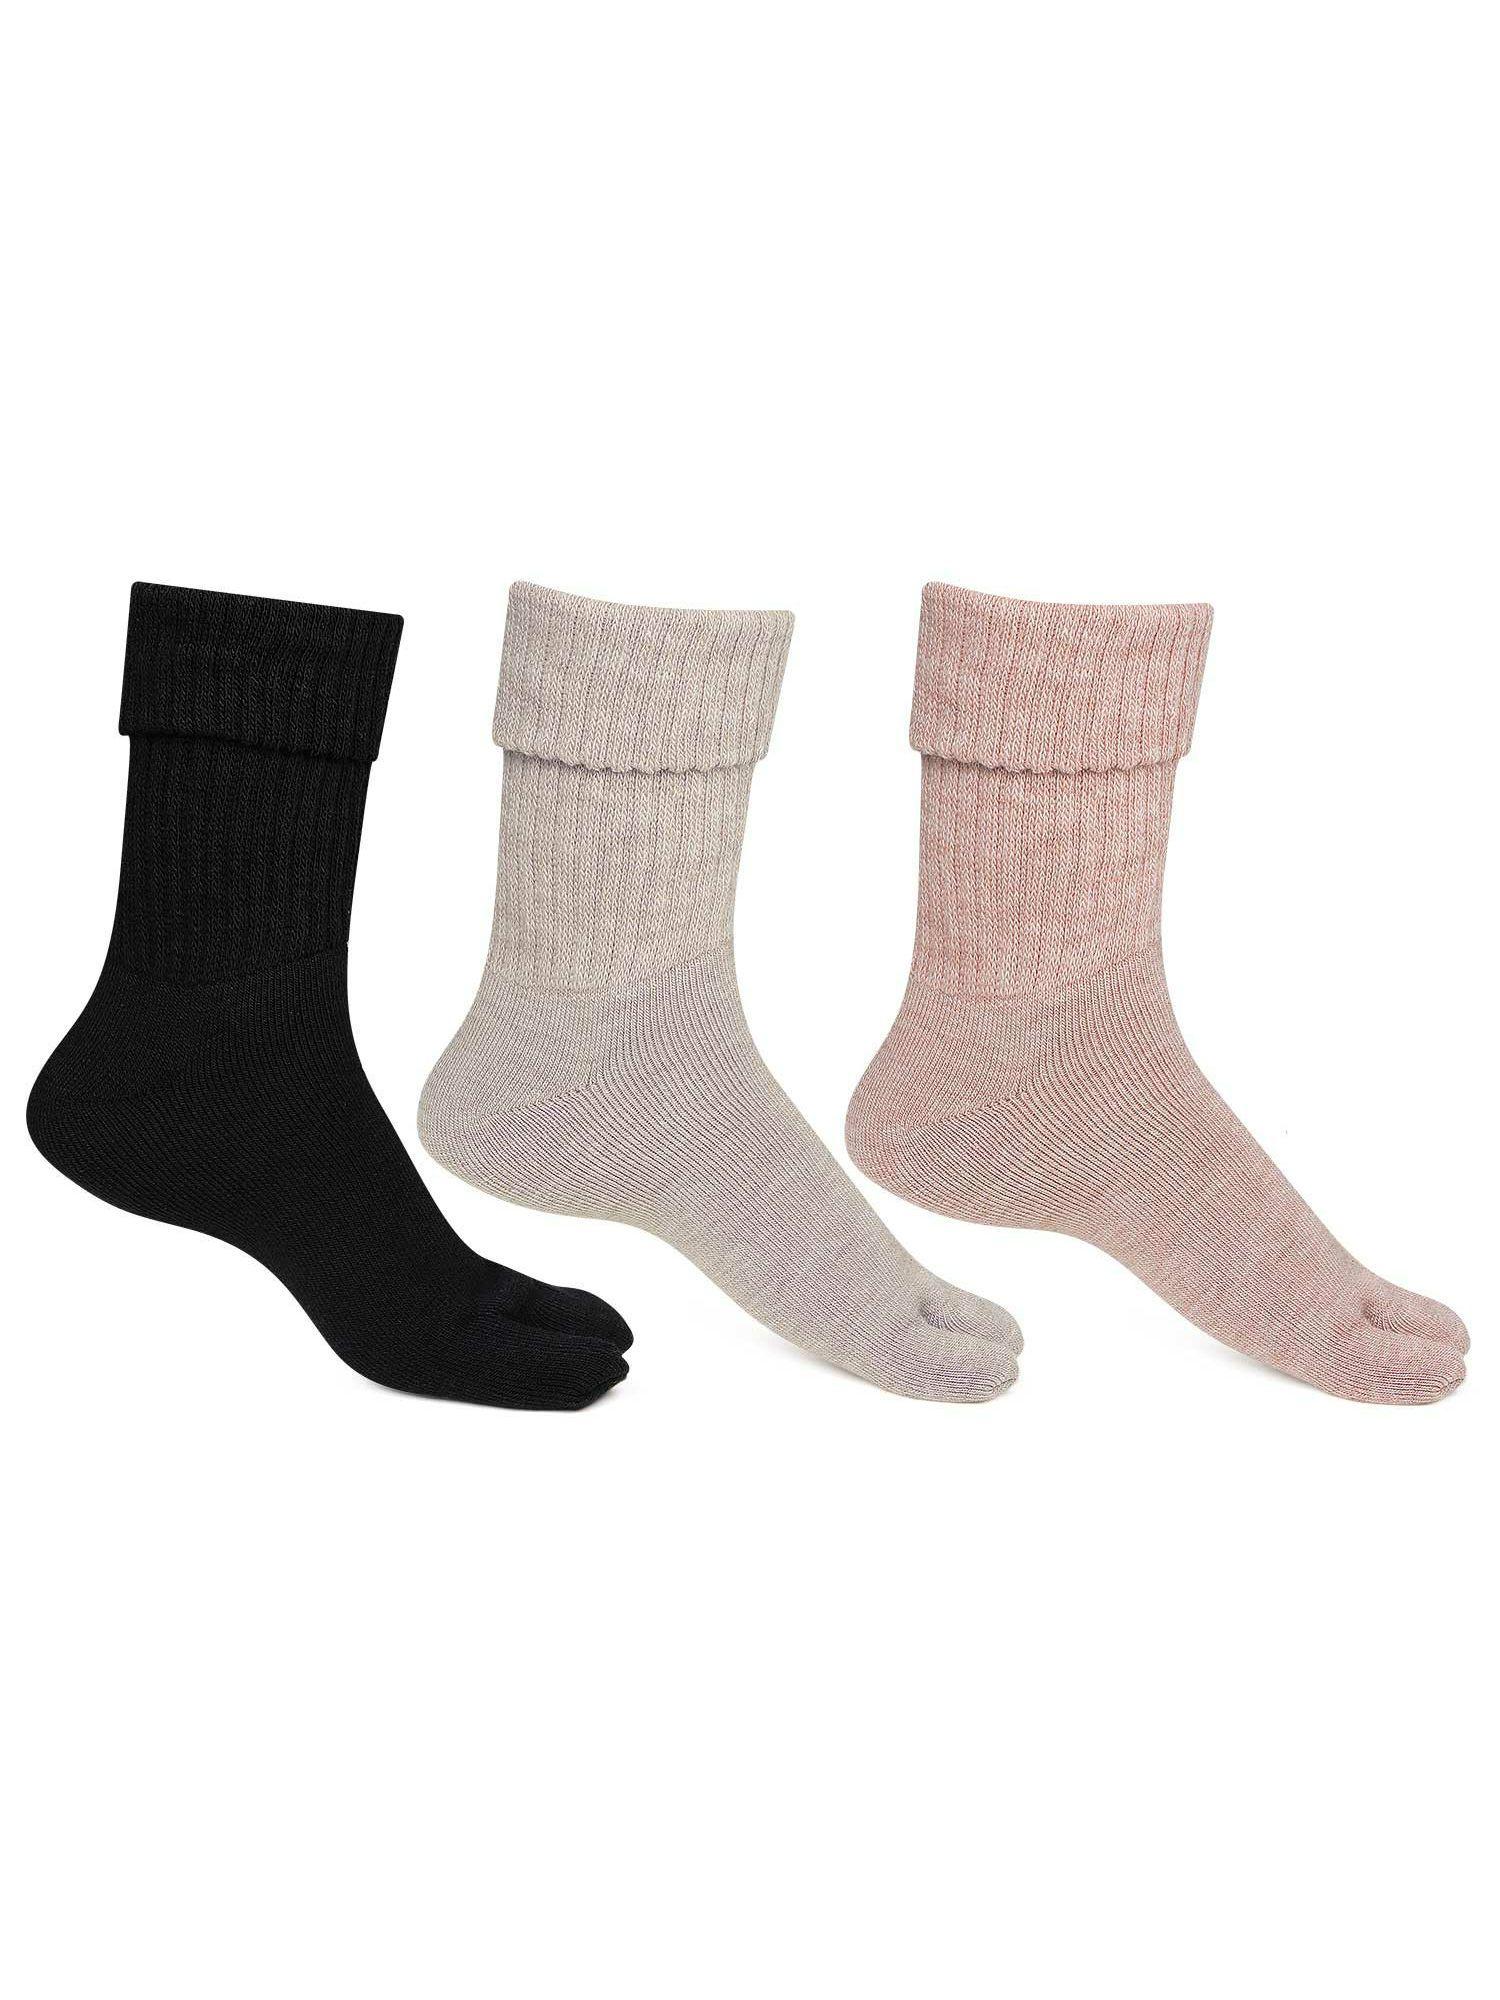 women multicolored woolen thumb socks -pack of 3